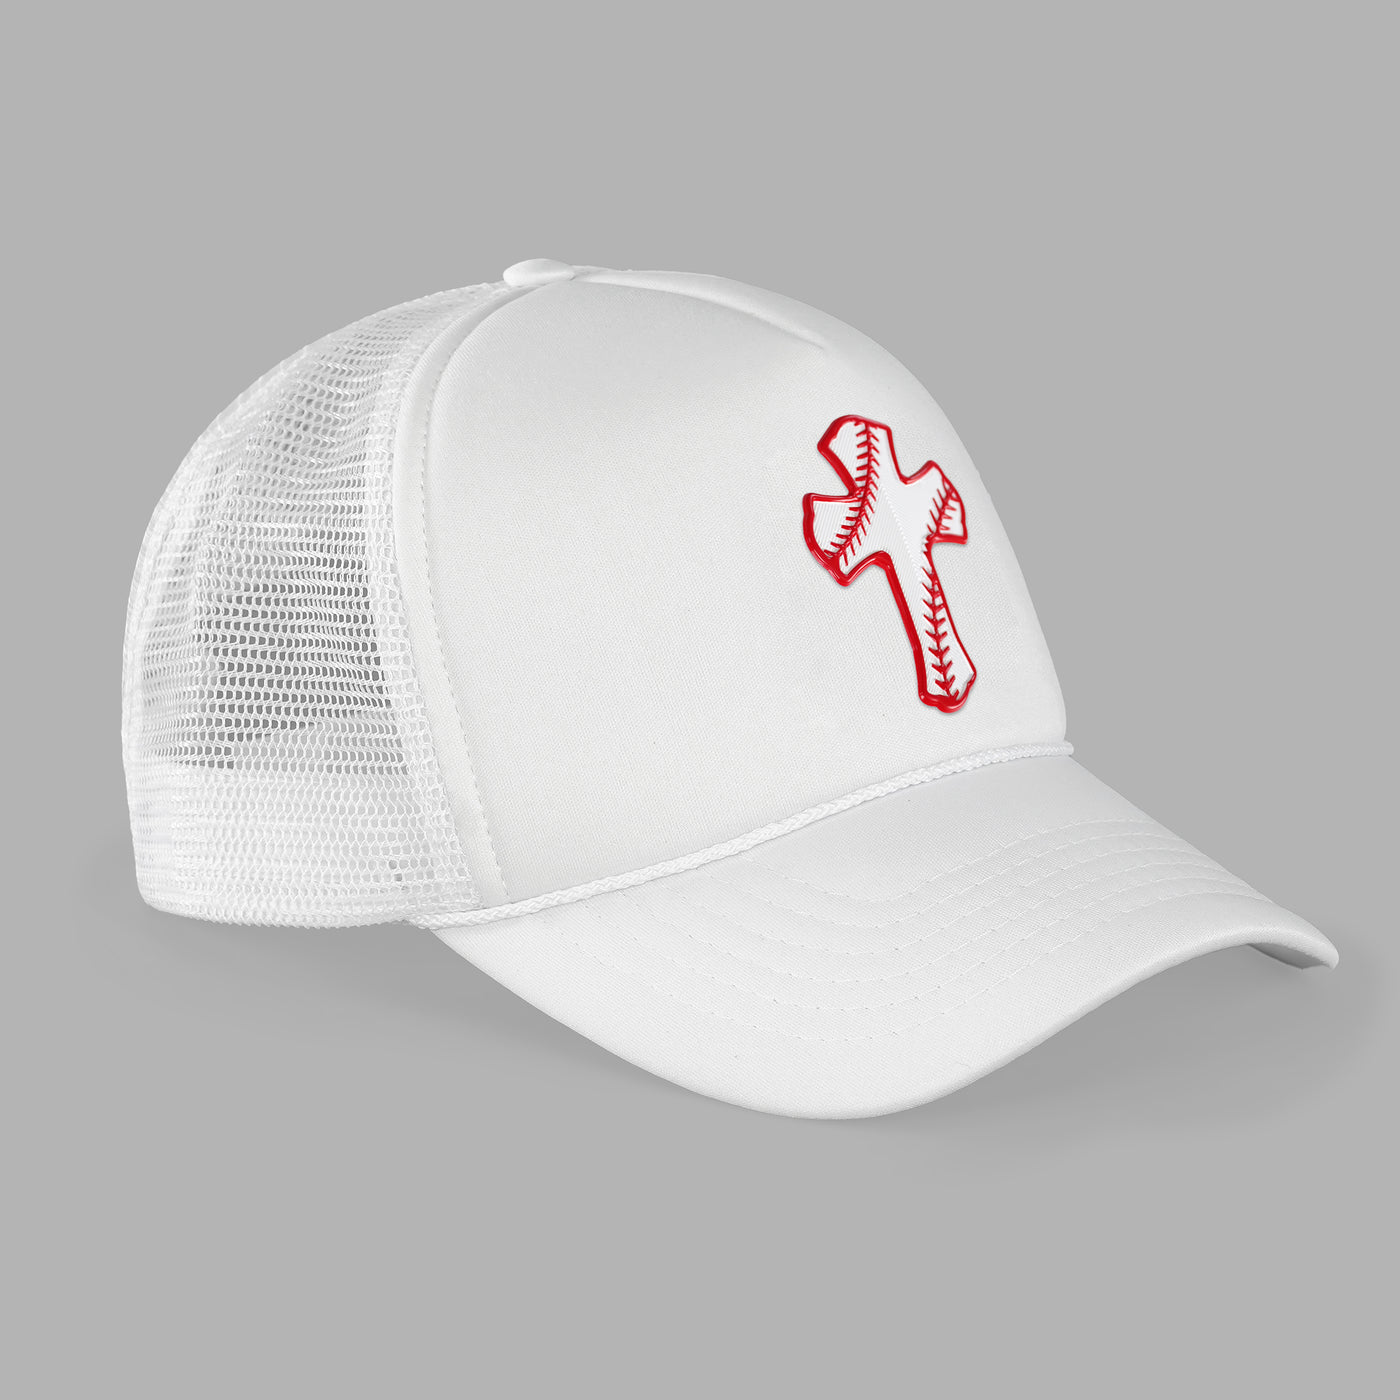 Baseball Cross Patch Trucker Hat